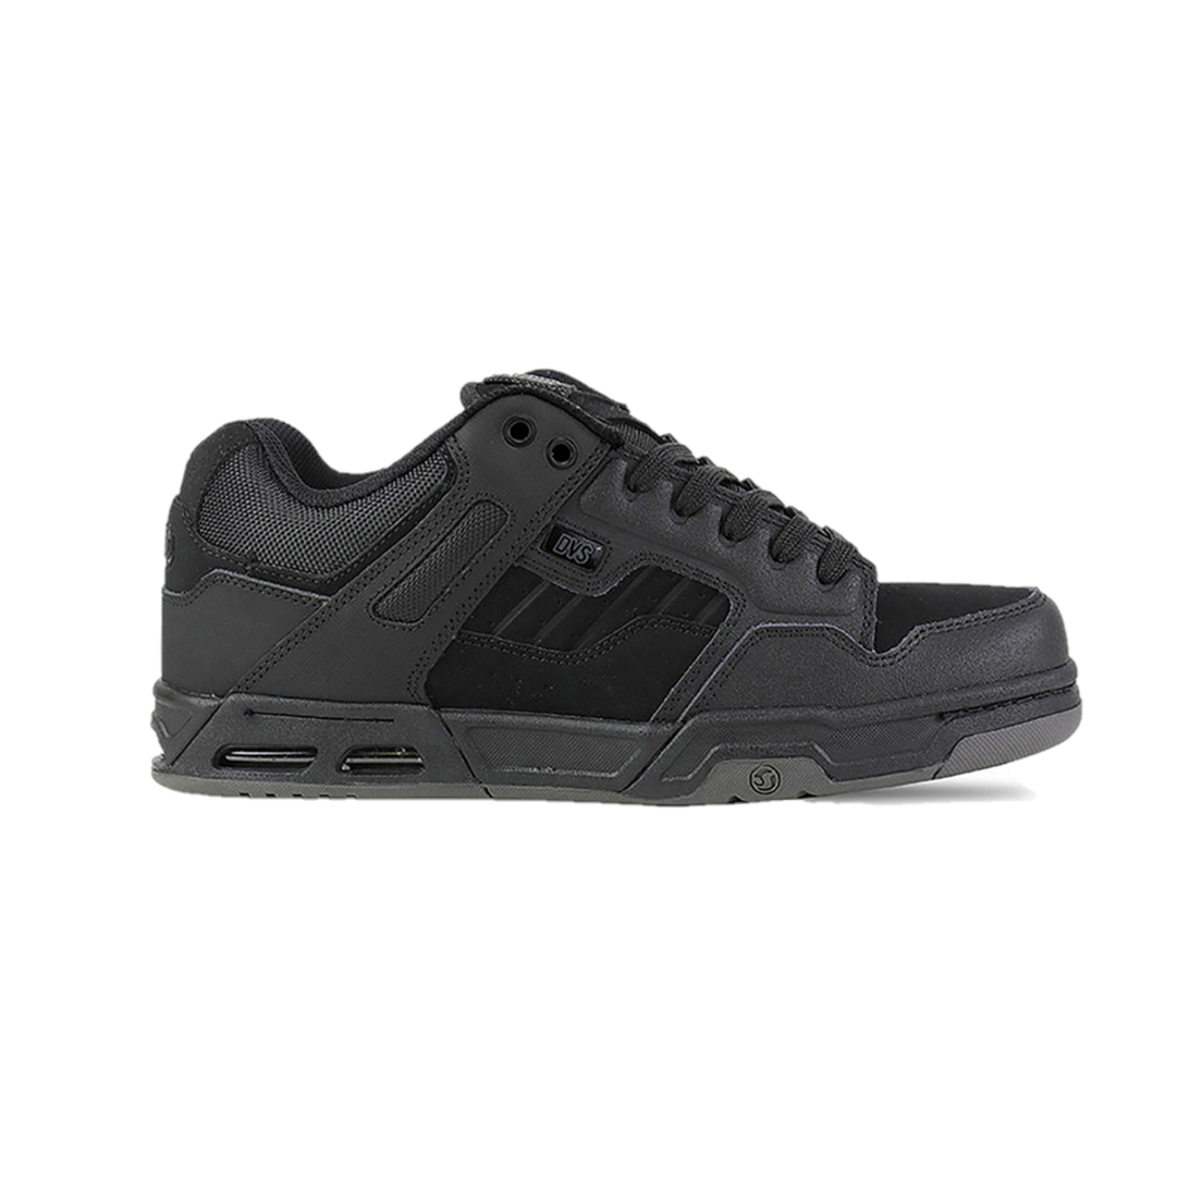 DVS F0000056982 ENDURO HEIR MN'S (Medium) Black/Black Leather & Nubuck Skate Shoes